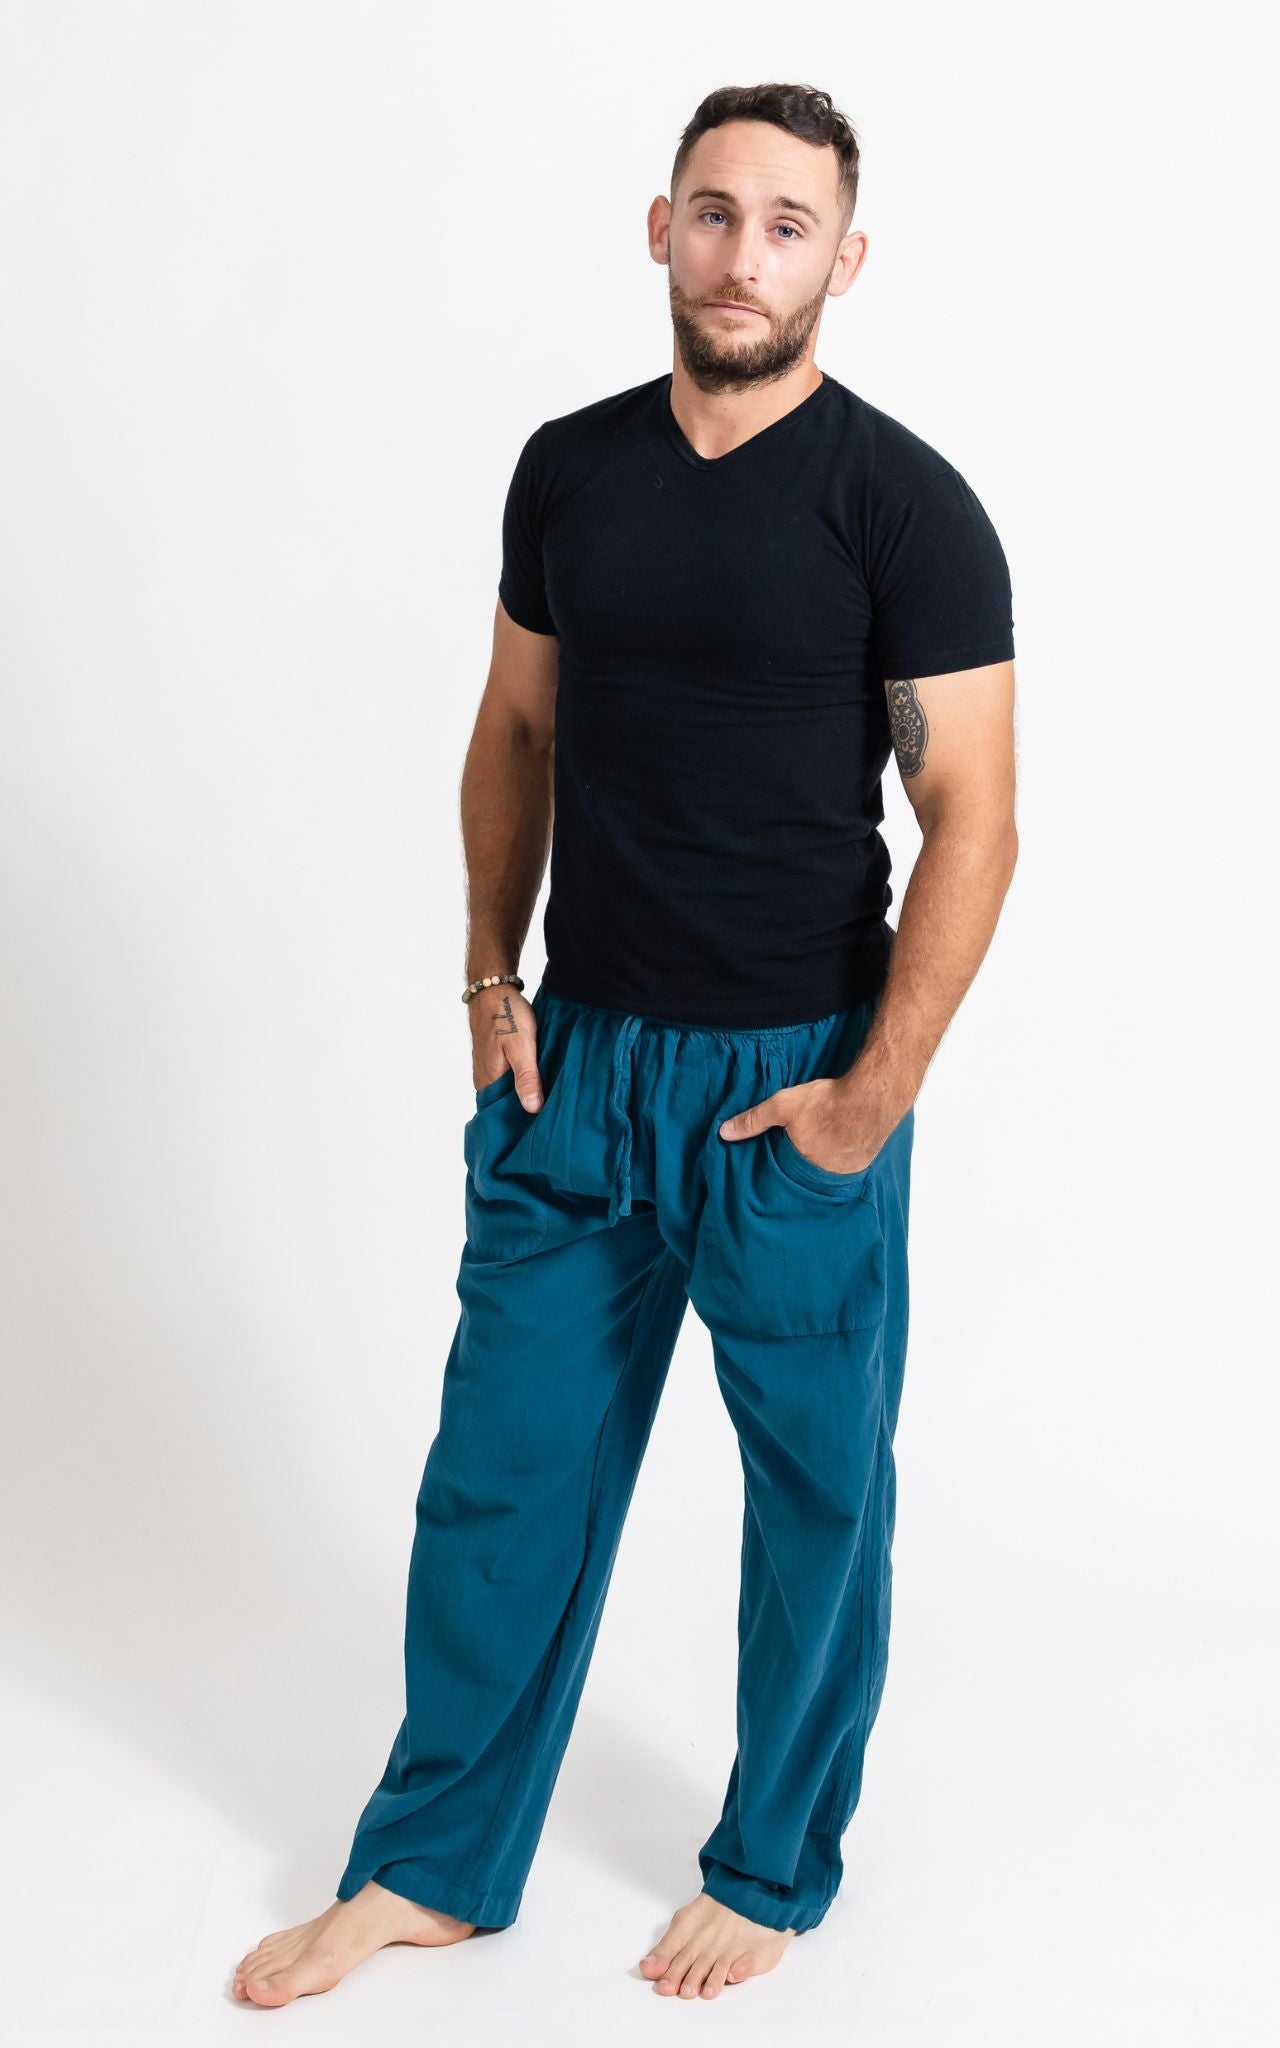 Surya Australia Cotton Jerome Pants made in Nepal - Turquoise